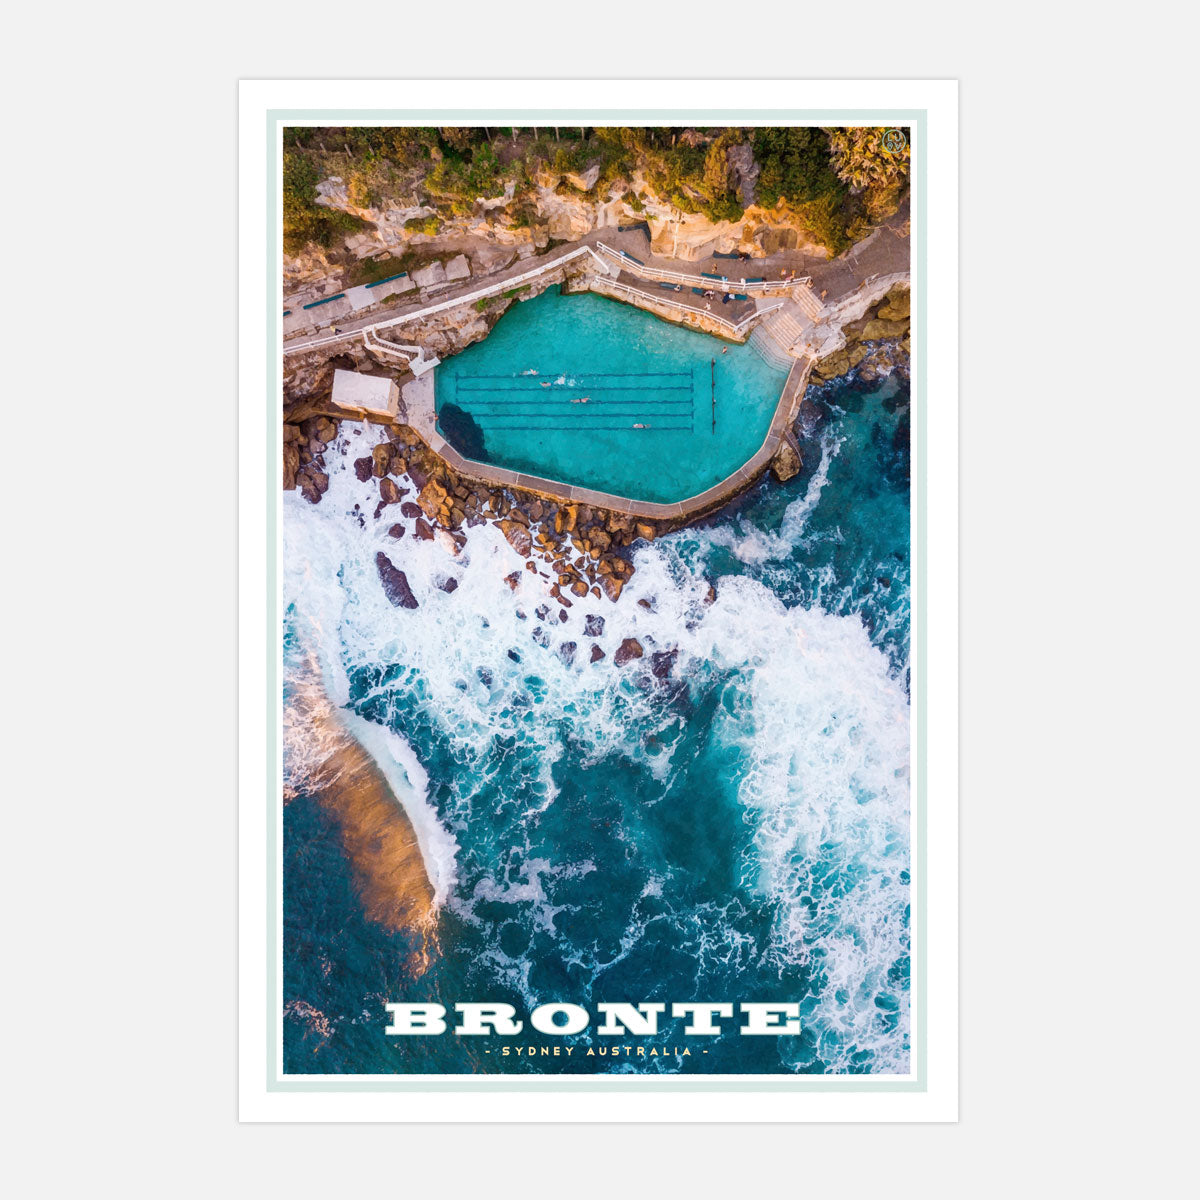 Bronte pool vintage travel style print by places we luv